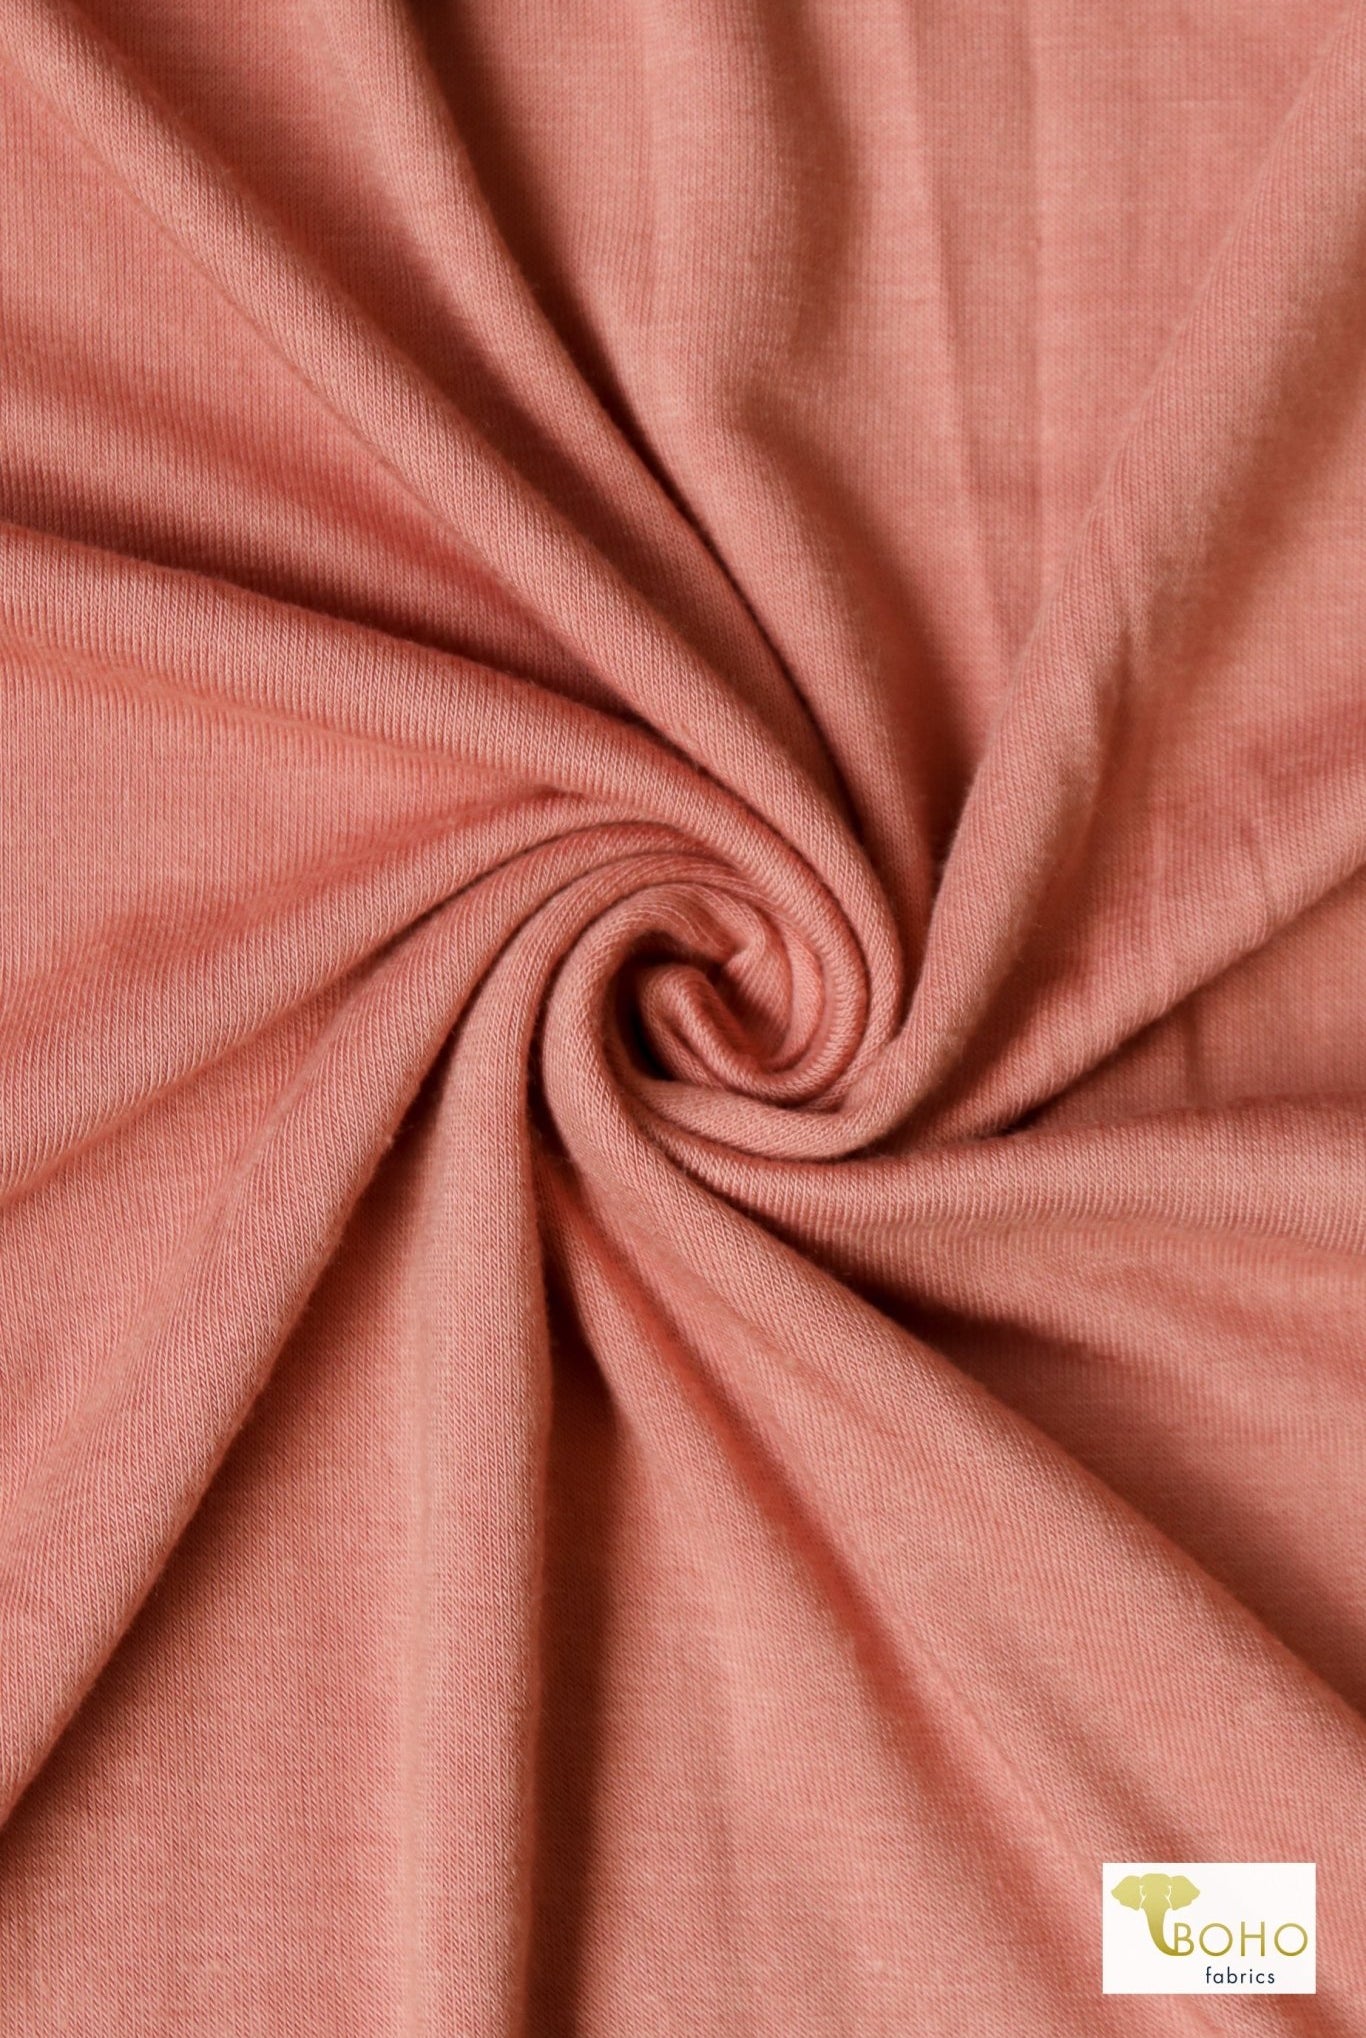 Desert Peach, Solid Rayon Spandex Fabric - Boho Fabrics